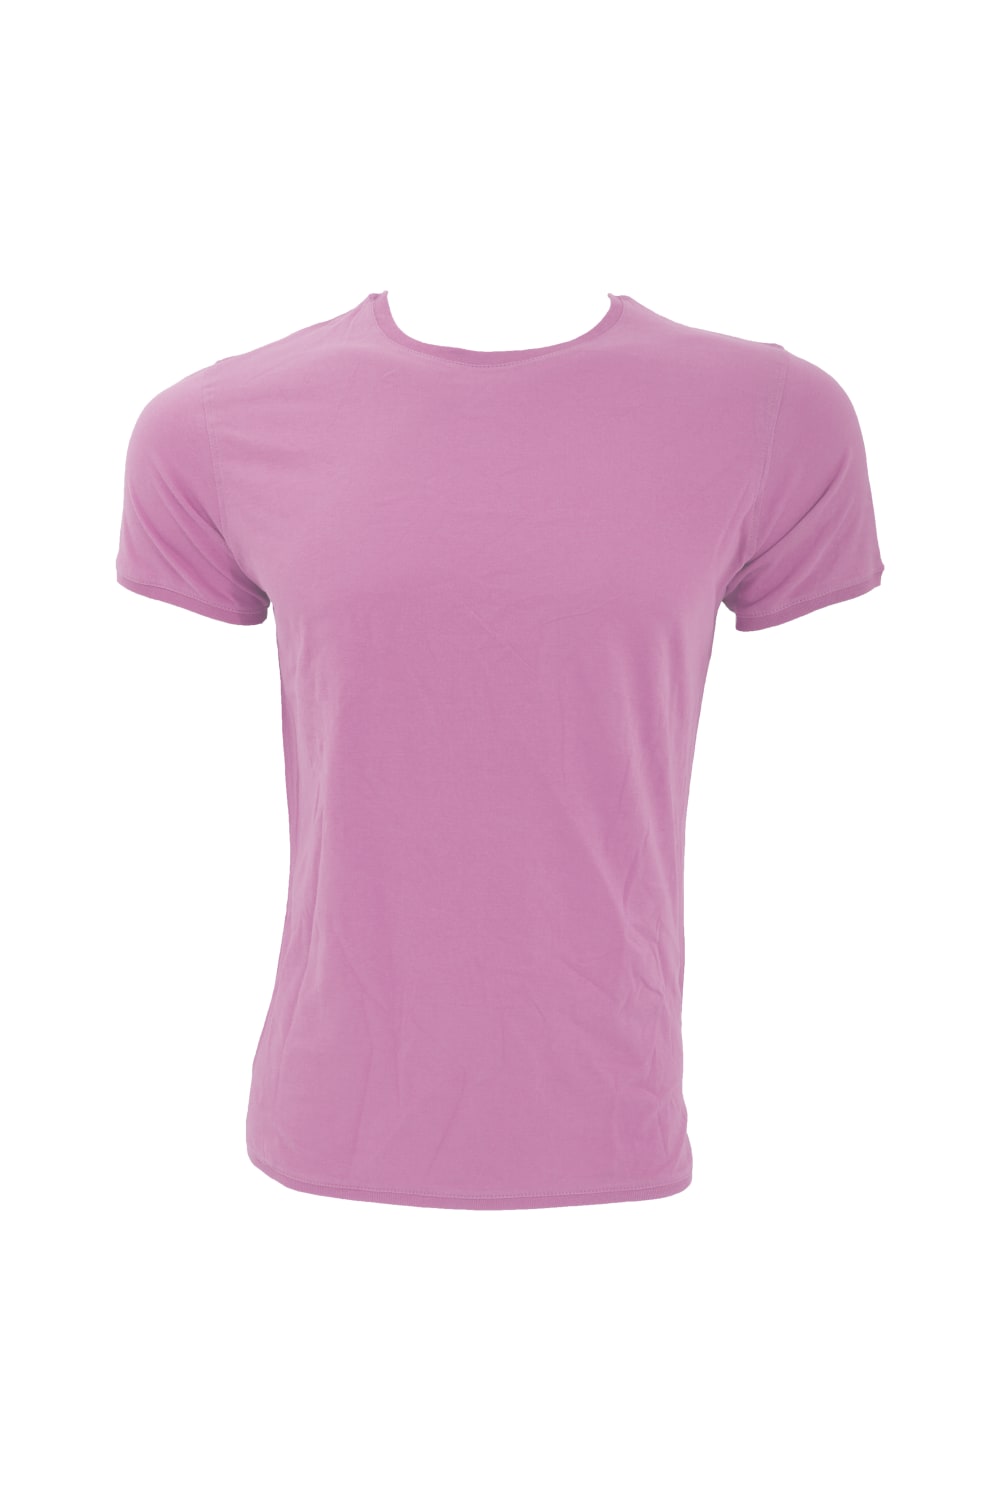 B&C Paradise Mens Flamingo Short Sleeve T-Shirt (Pacific Pink)